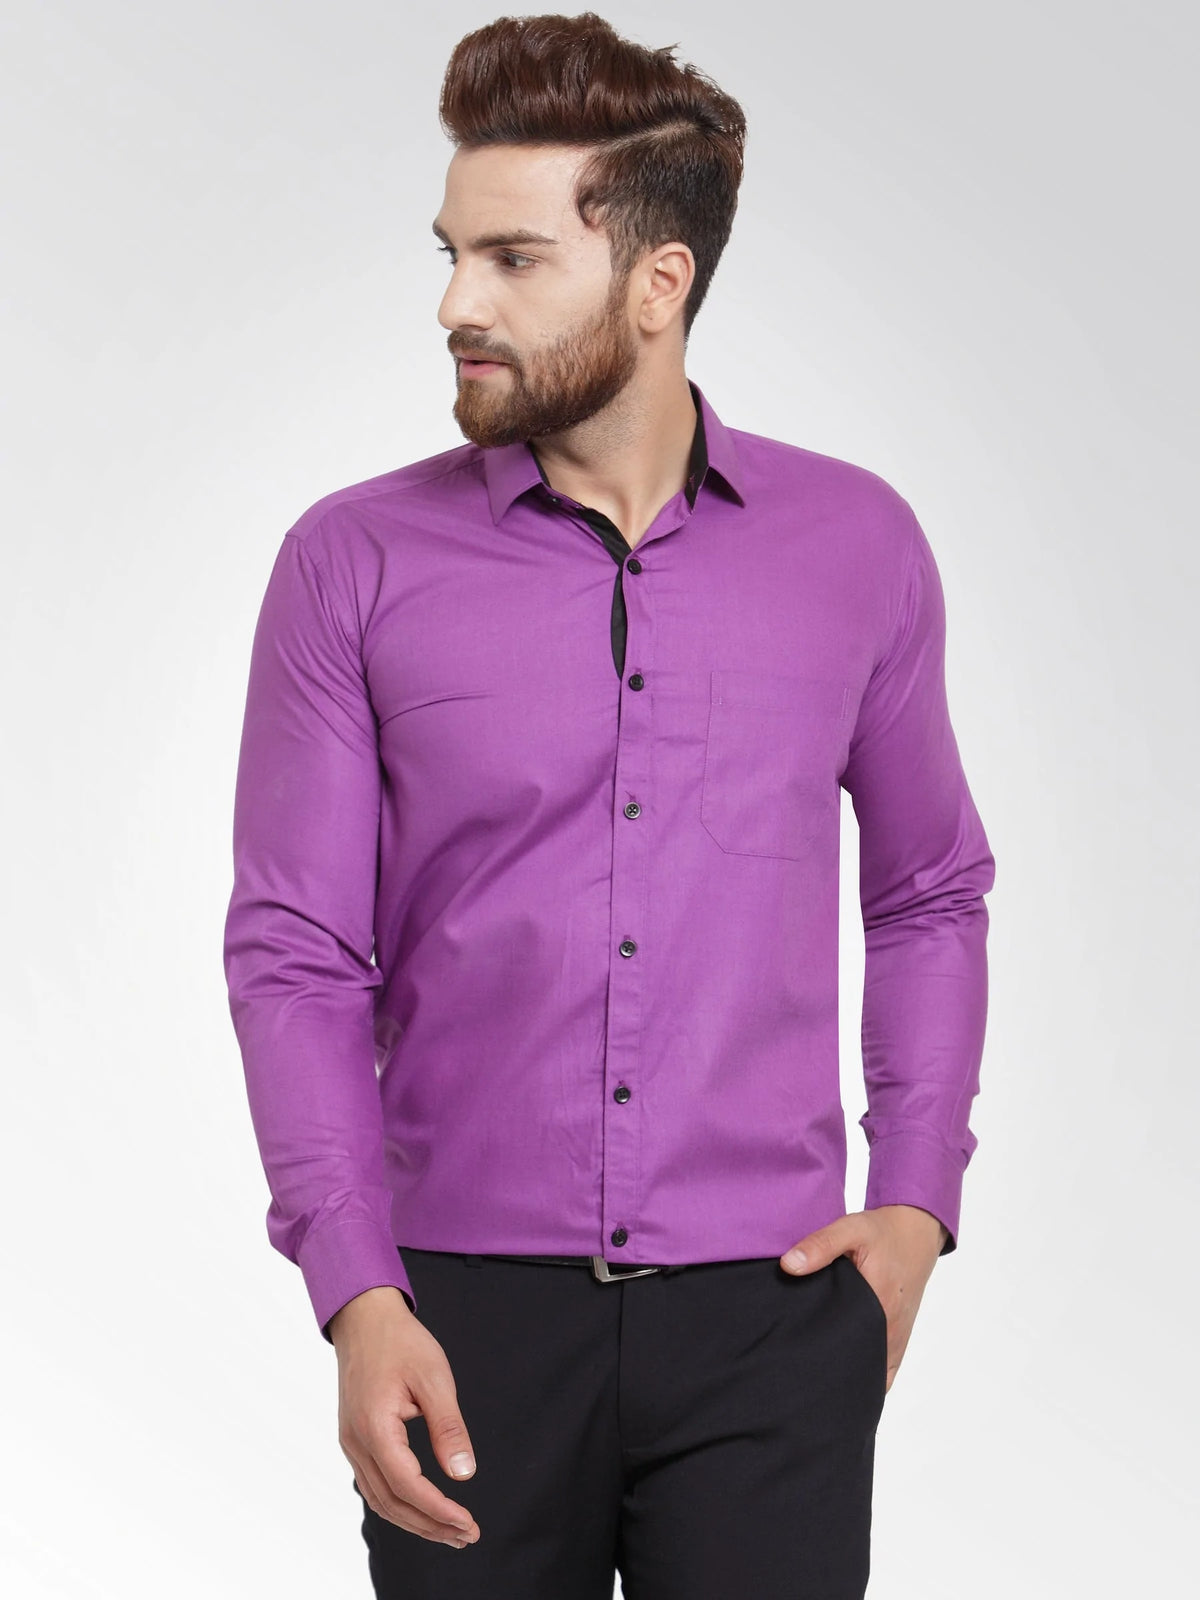 Jainish Purple Formal Shirt with black detailing ( SF 411Purple )